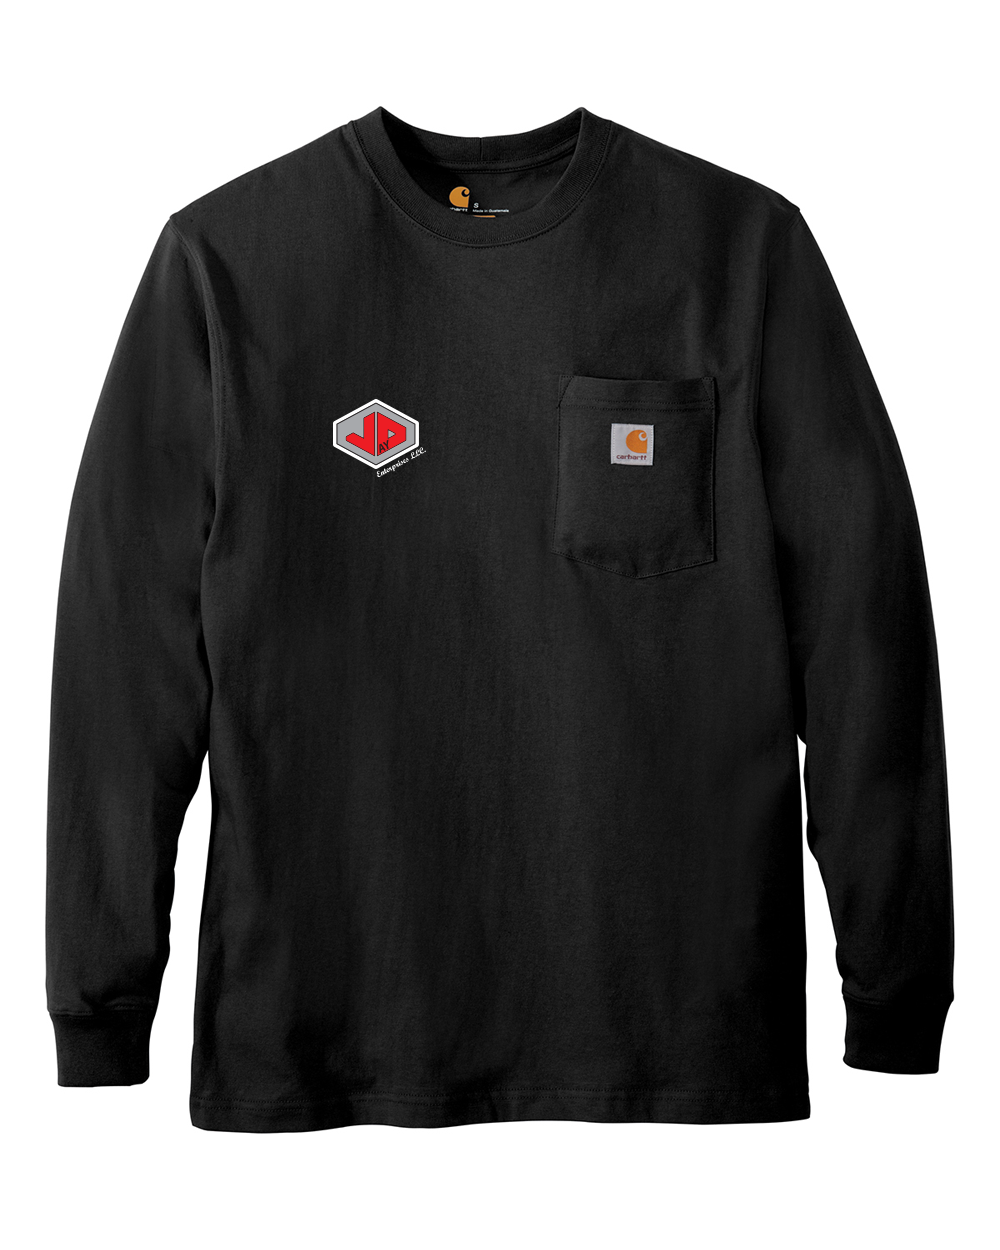 Jay D Enterprises - Carhartt Workwear Pocket Long Sleeve T-Shirt